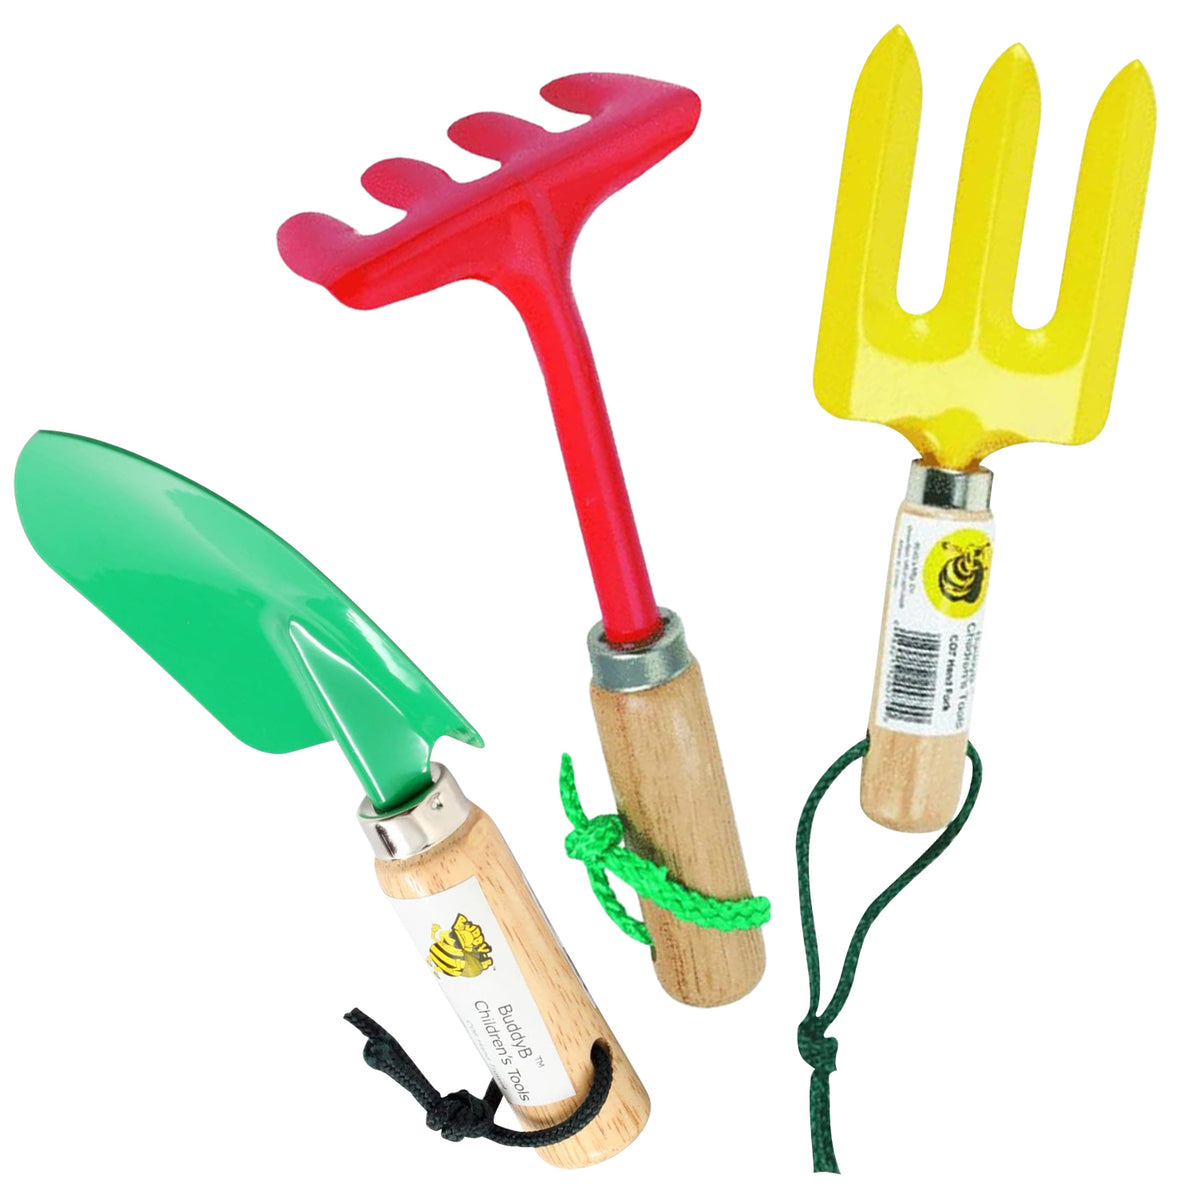 Gardening Tools for Kids Bundle | Mini Hand Fork, Hand Trowel, and Hand Hoe with Wooden Handles | Children's Gardening Tools Set